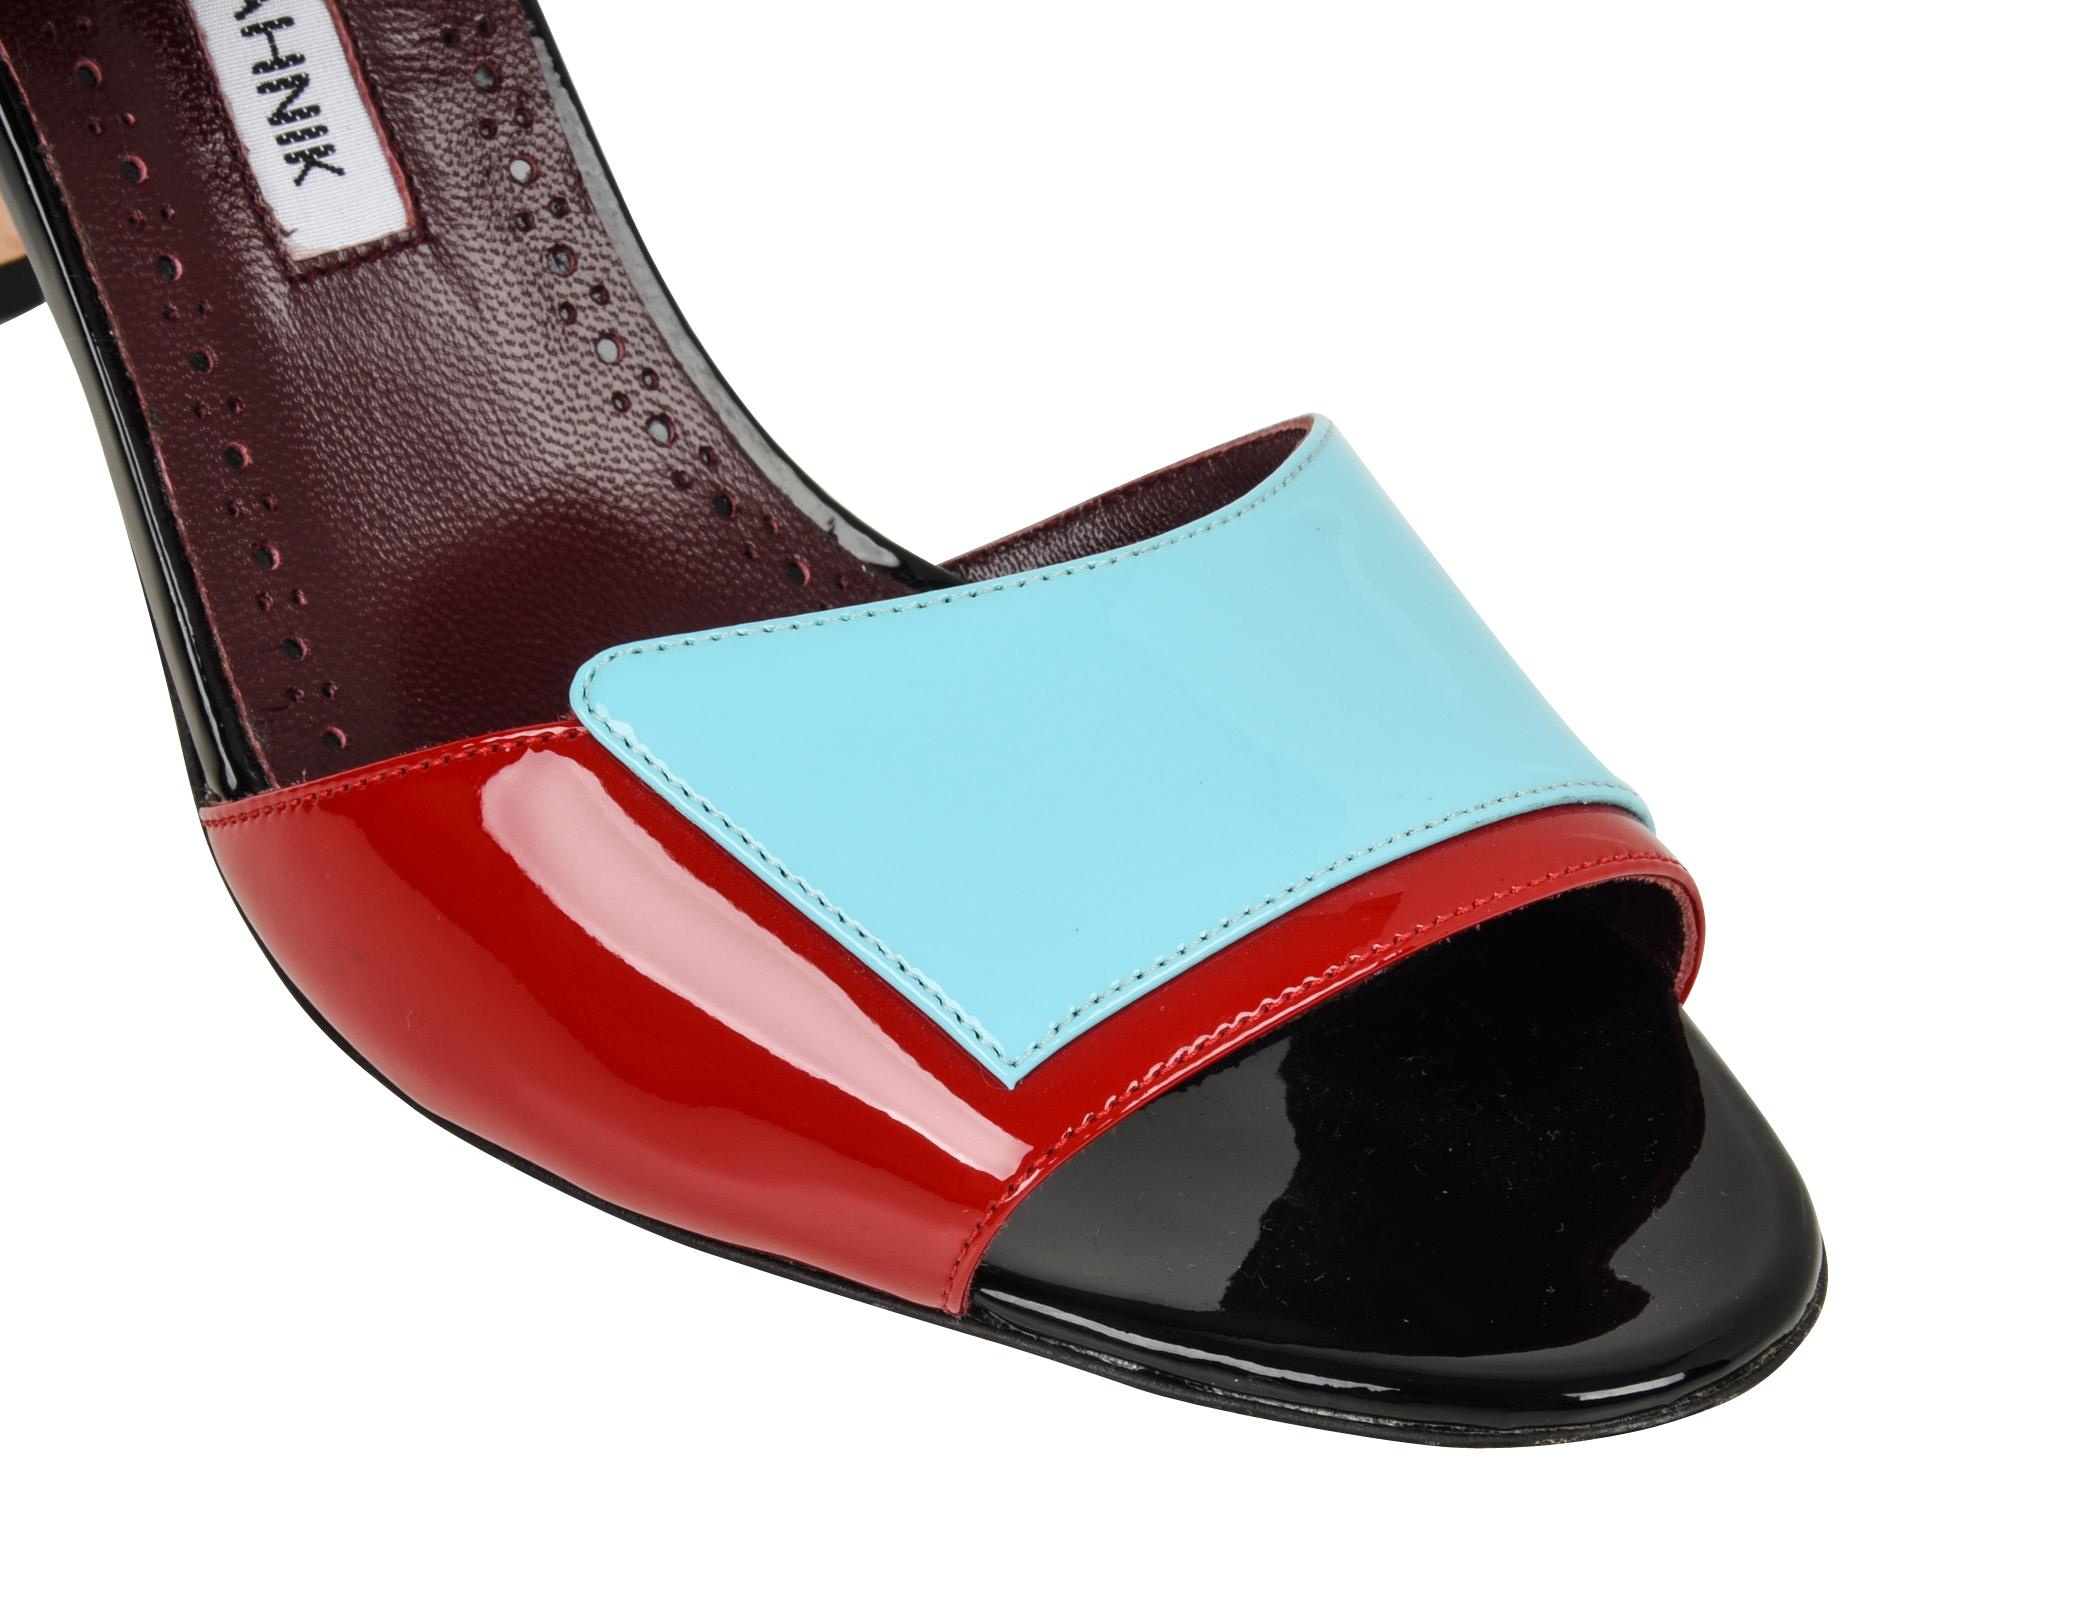 Gray Manolo Blahnik Shoe Multi Coloured Patent Leather Red Blue Black Sandal 40 / 10